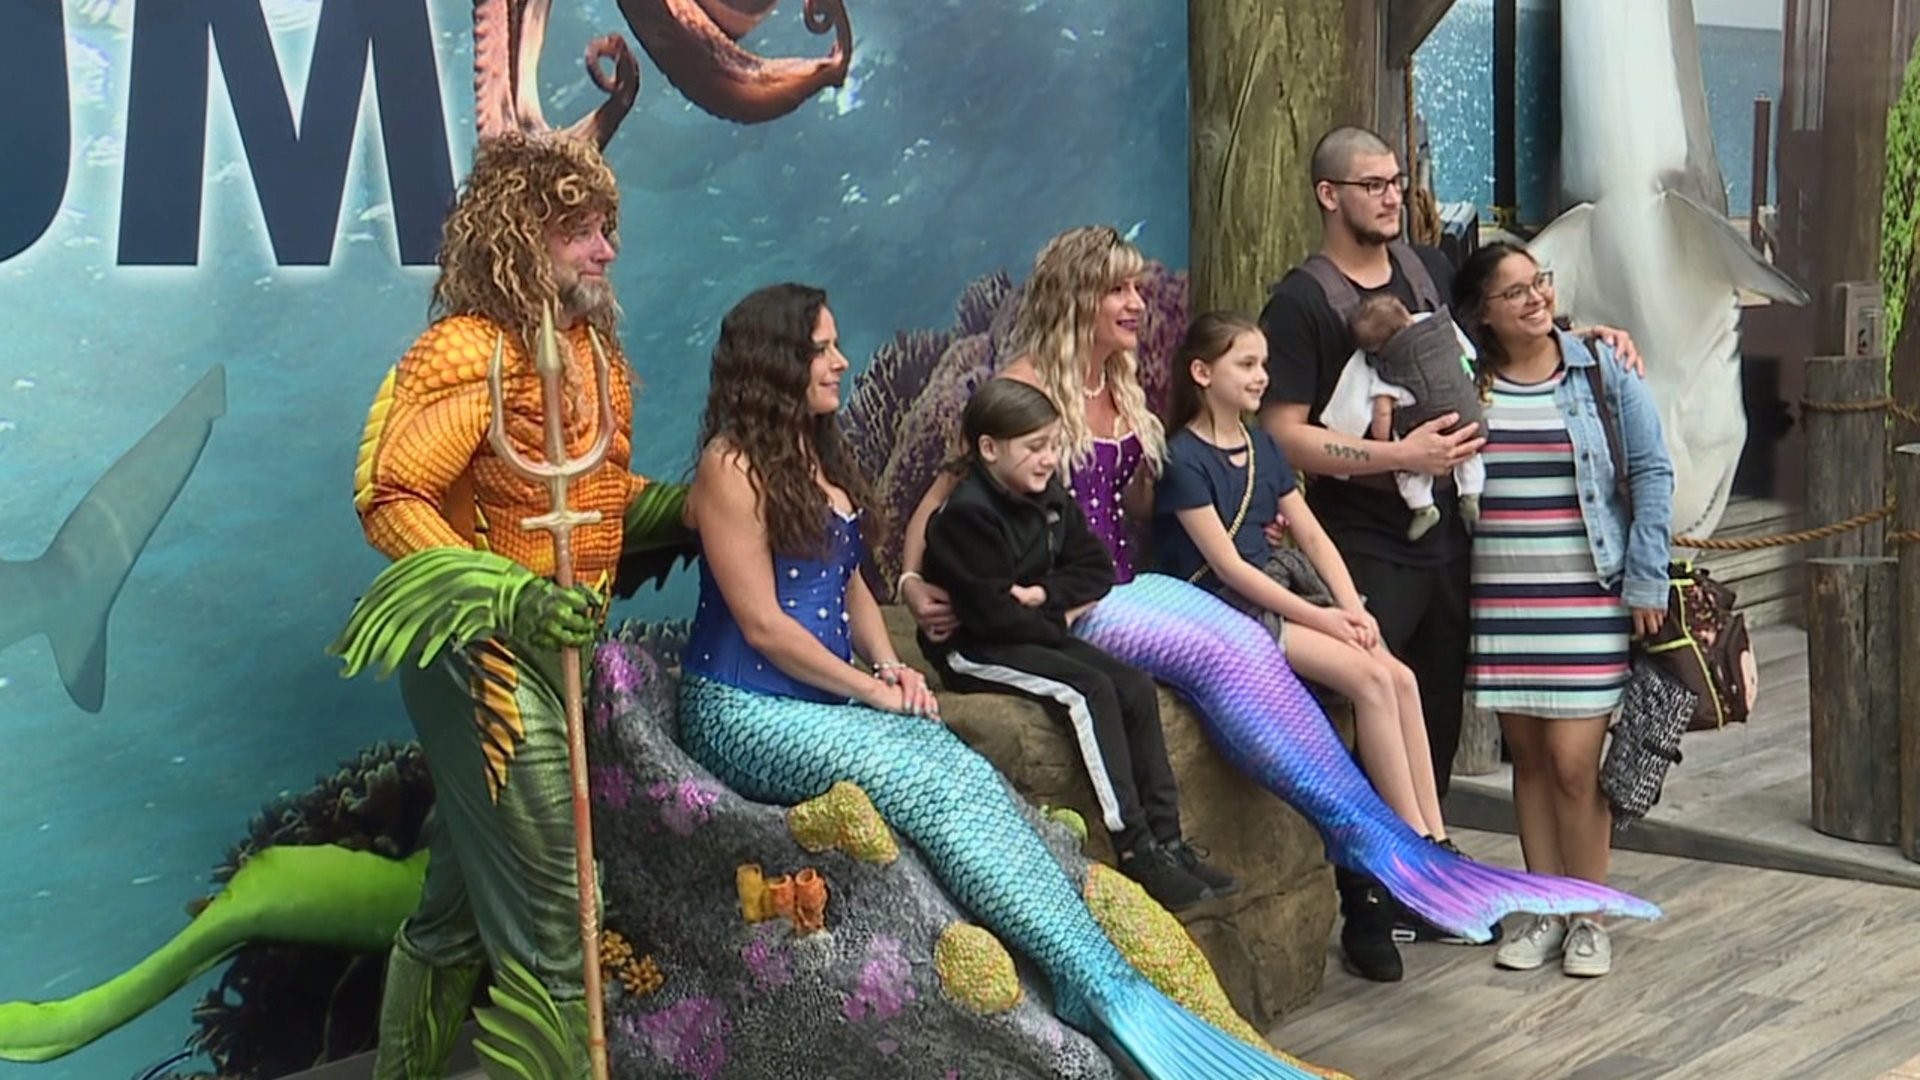 Celebrating International Mermaid Day at the Aquarium in Scranton